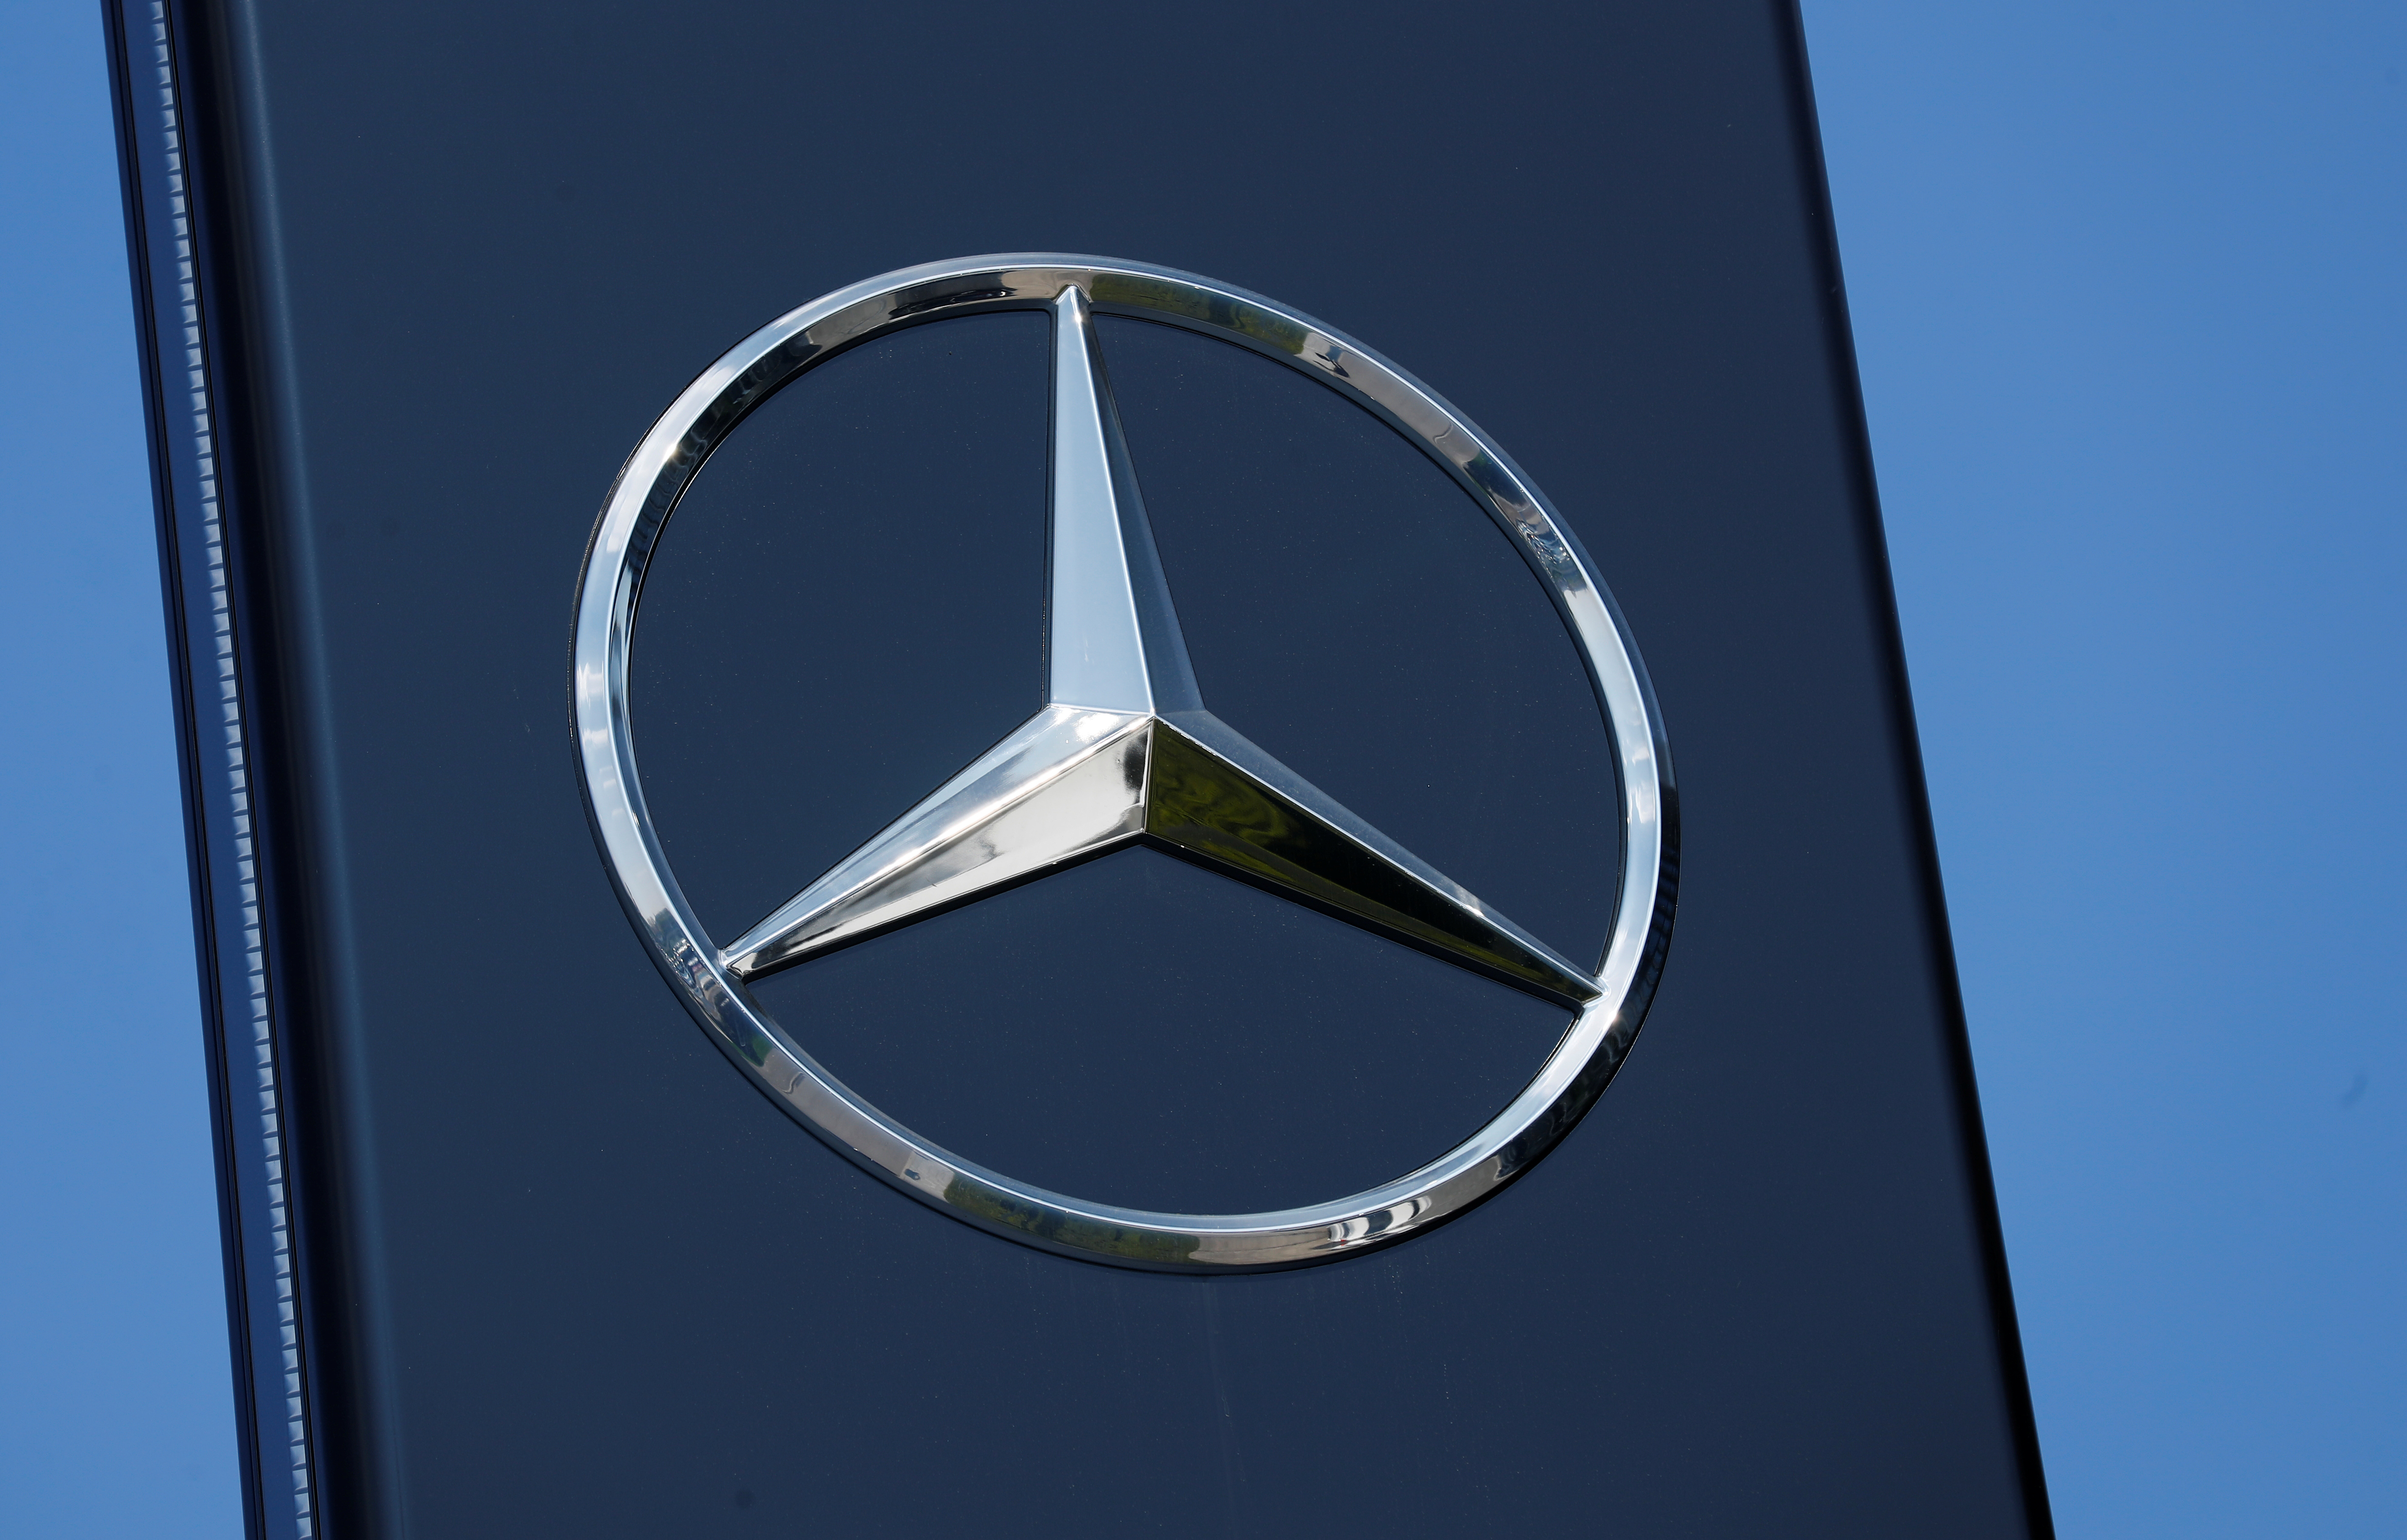 A Mercedes Benz logo is pictured at a Mercedes Benz branch in Stuttgart